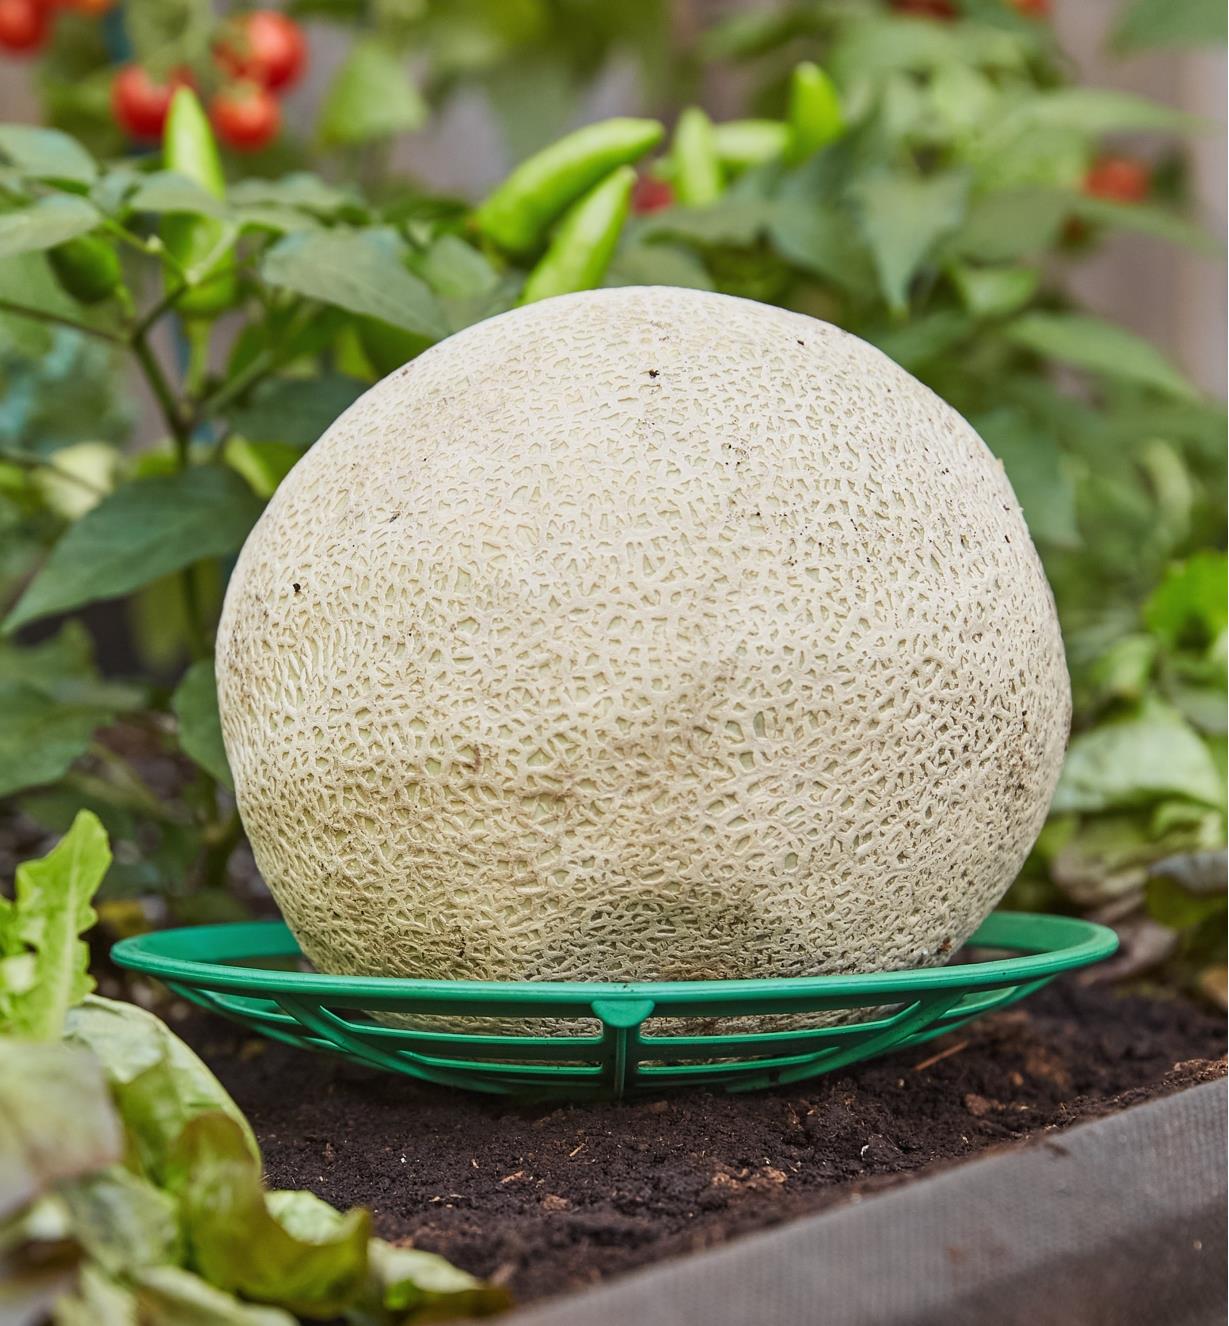 A melon sitting on a melon/squash cradle in a garden